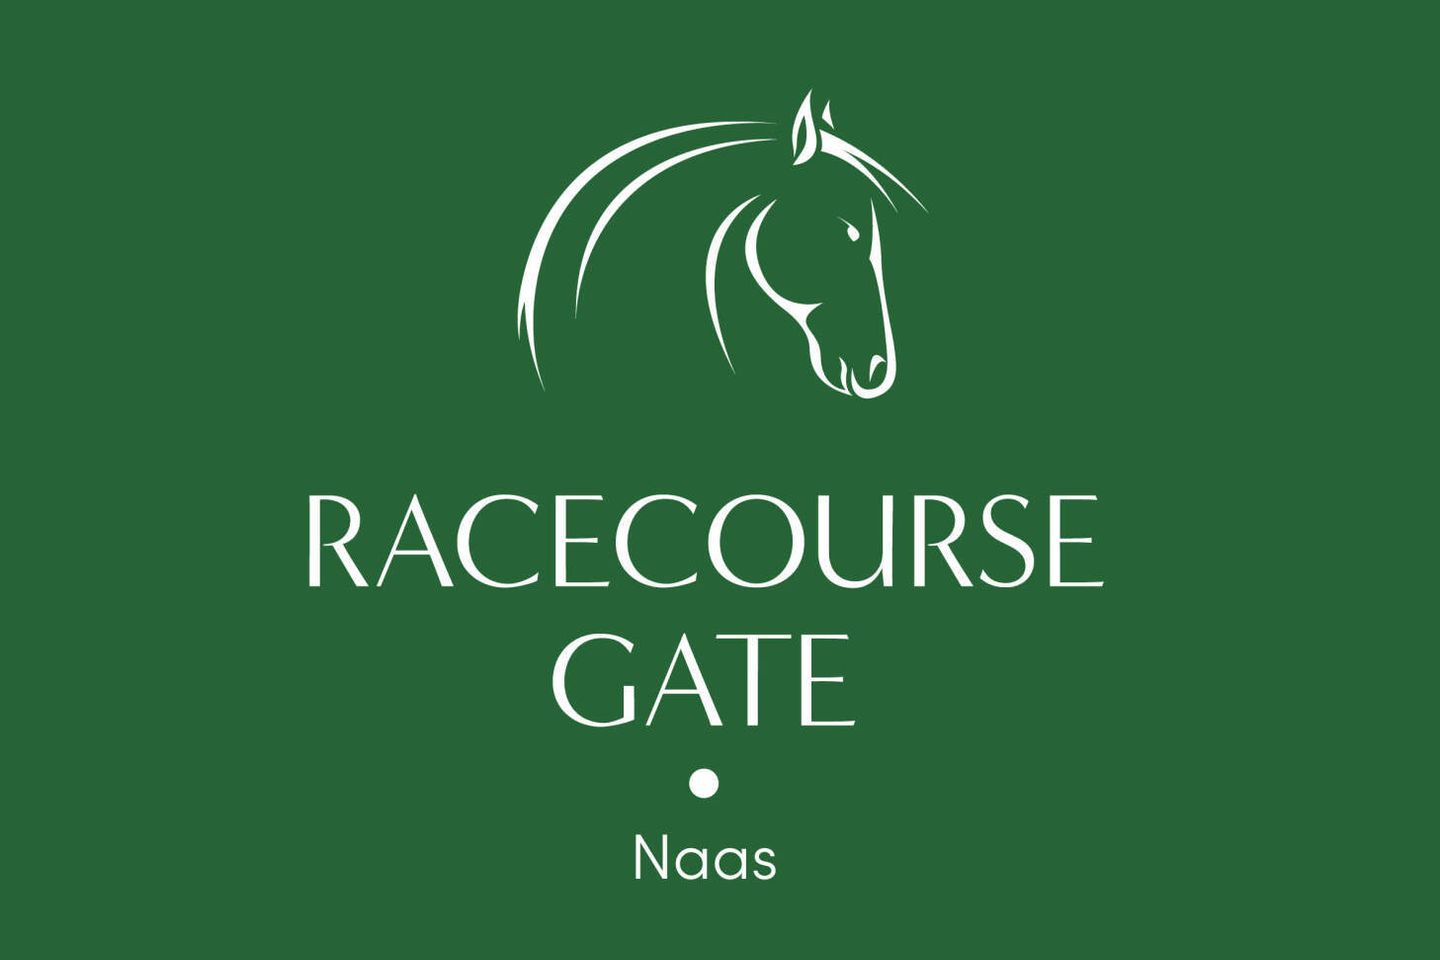 4 Bed Semi Detached, Racecourse Gate, 4 Bed Semi Detached, Racecourse Gate, Naas, Co. Kildare